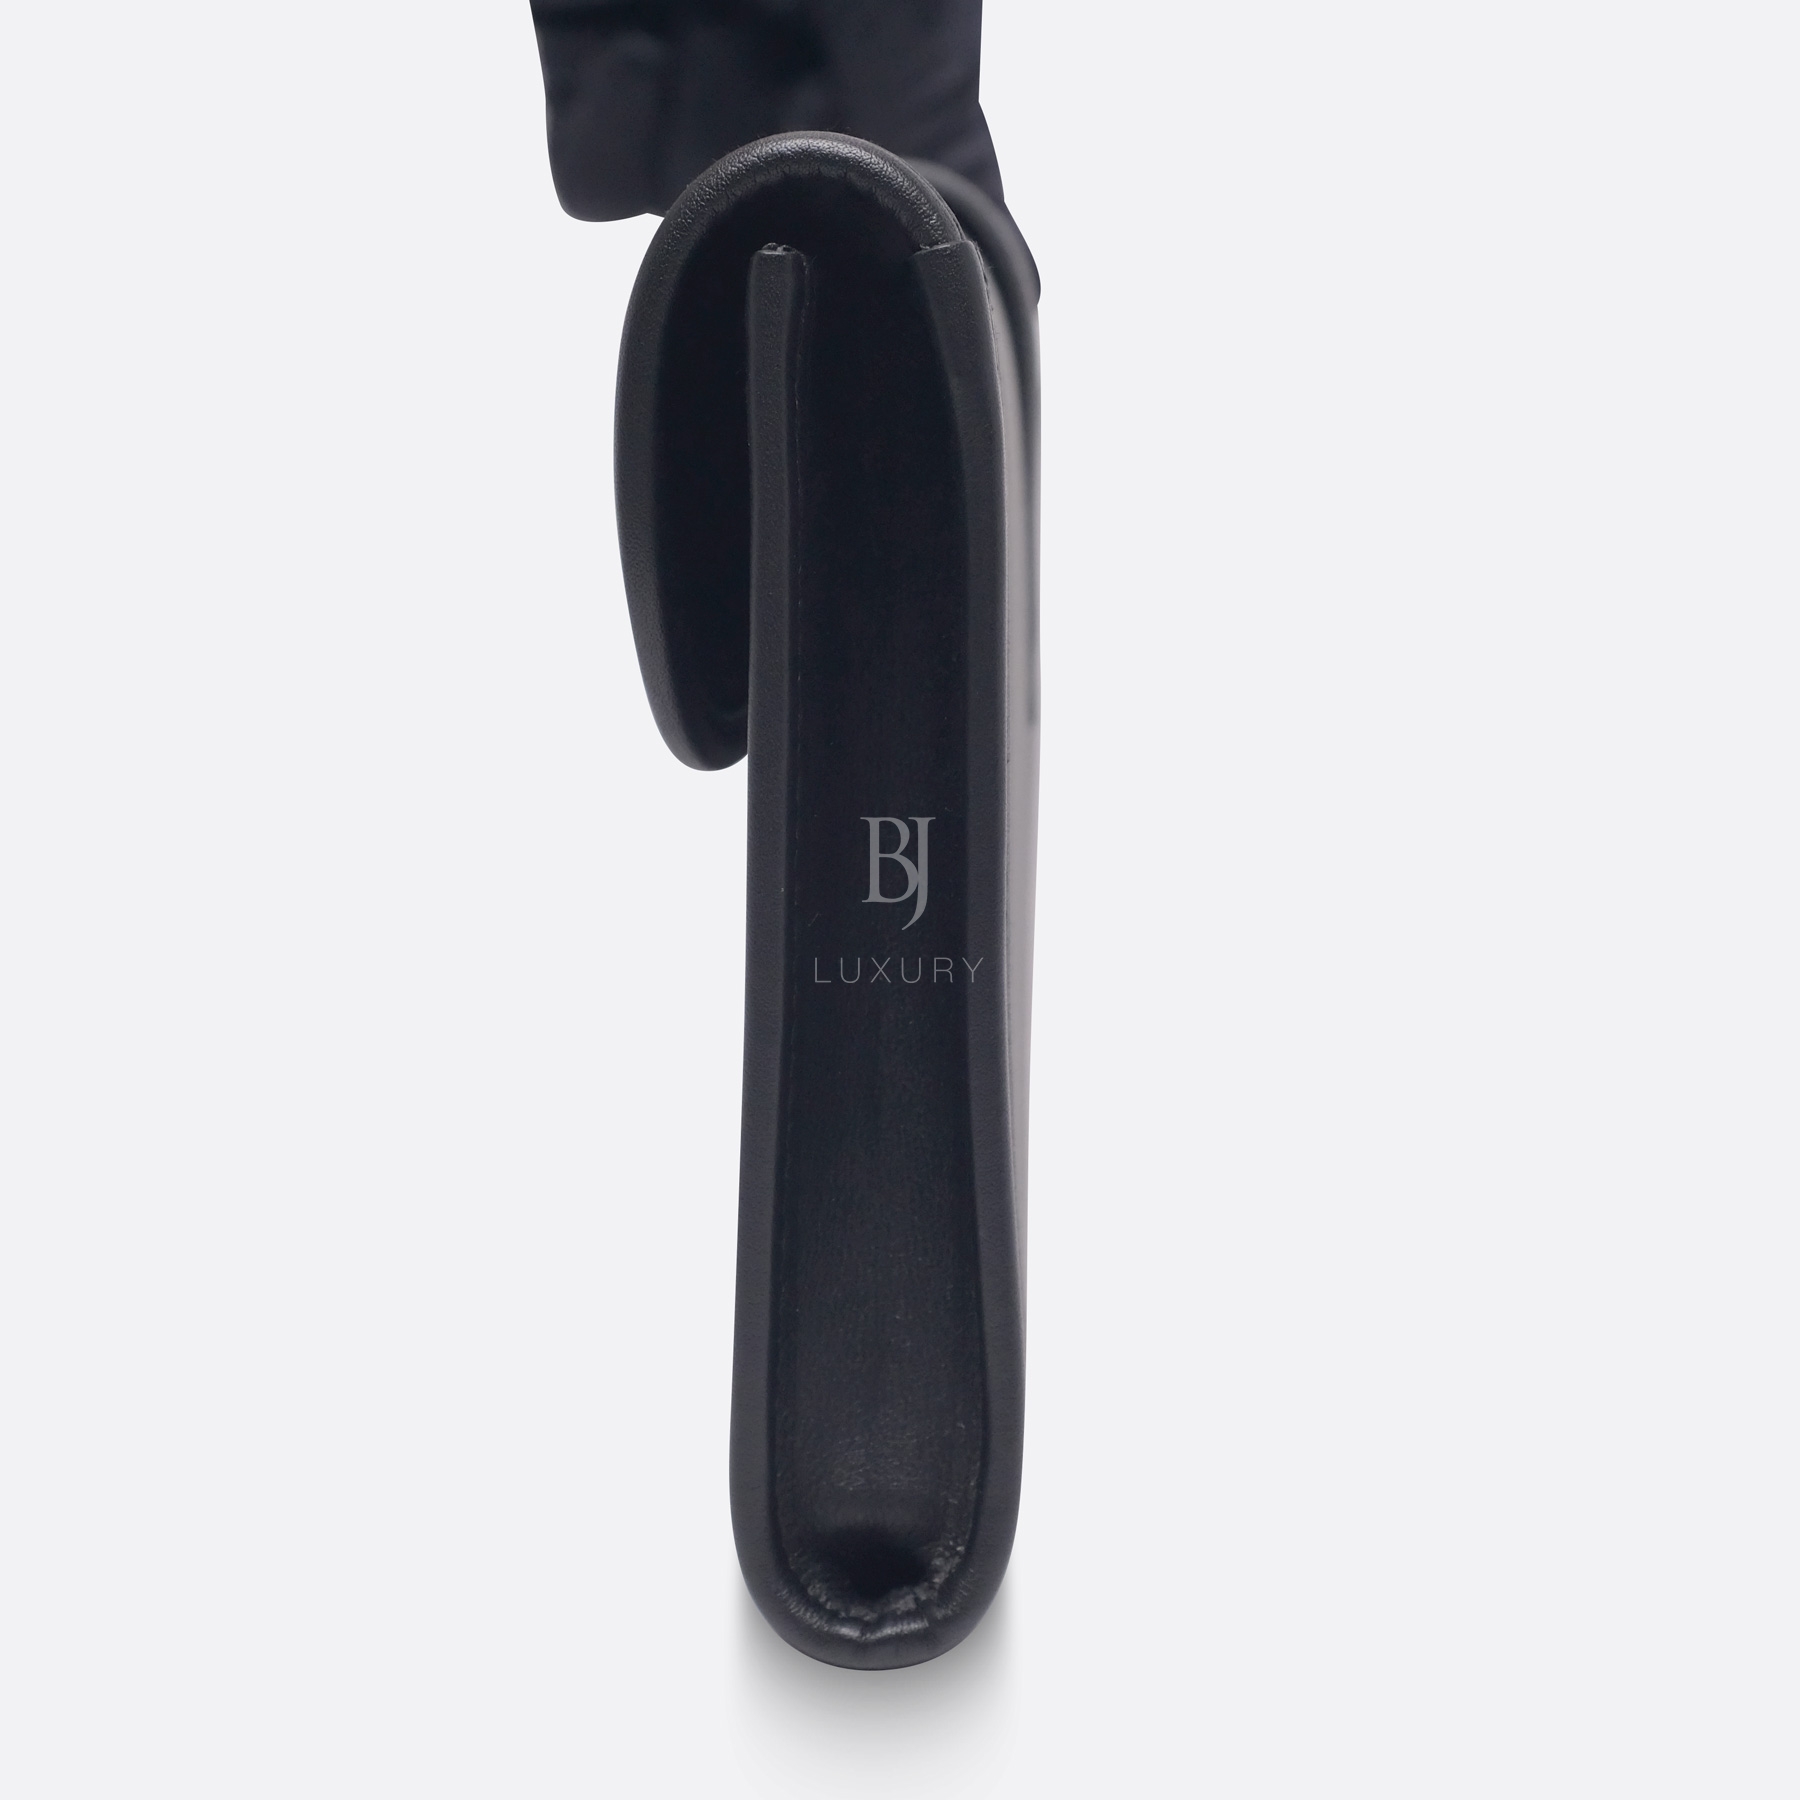 Hermes Jige 29 Black Swift BJ Luxury 4.jpg